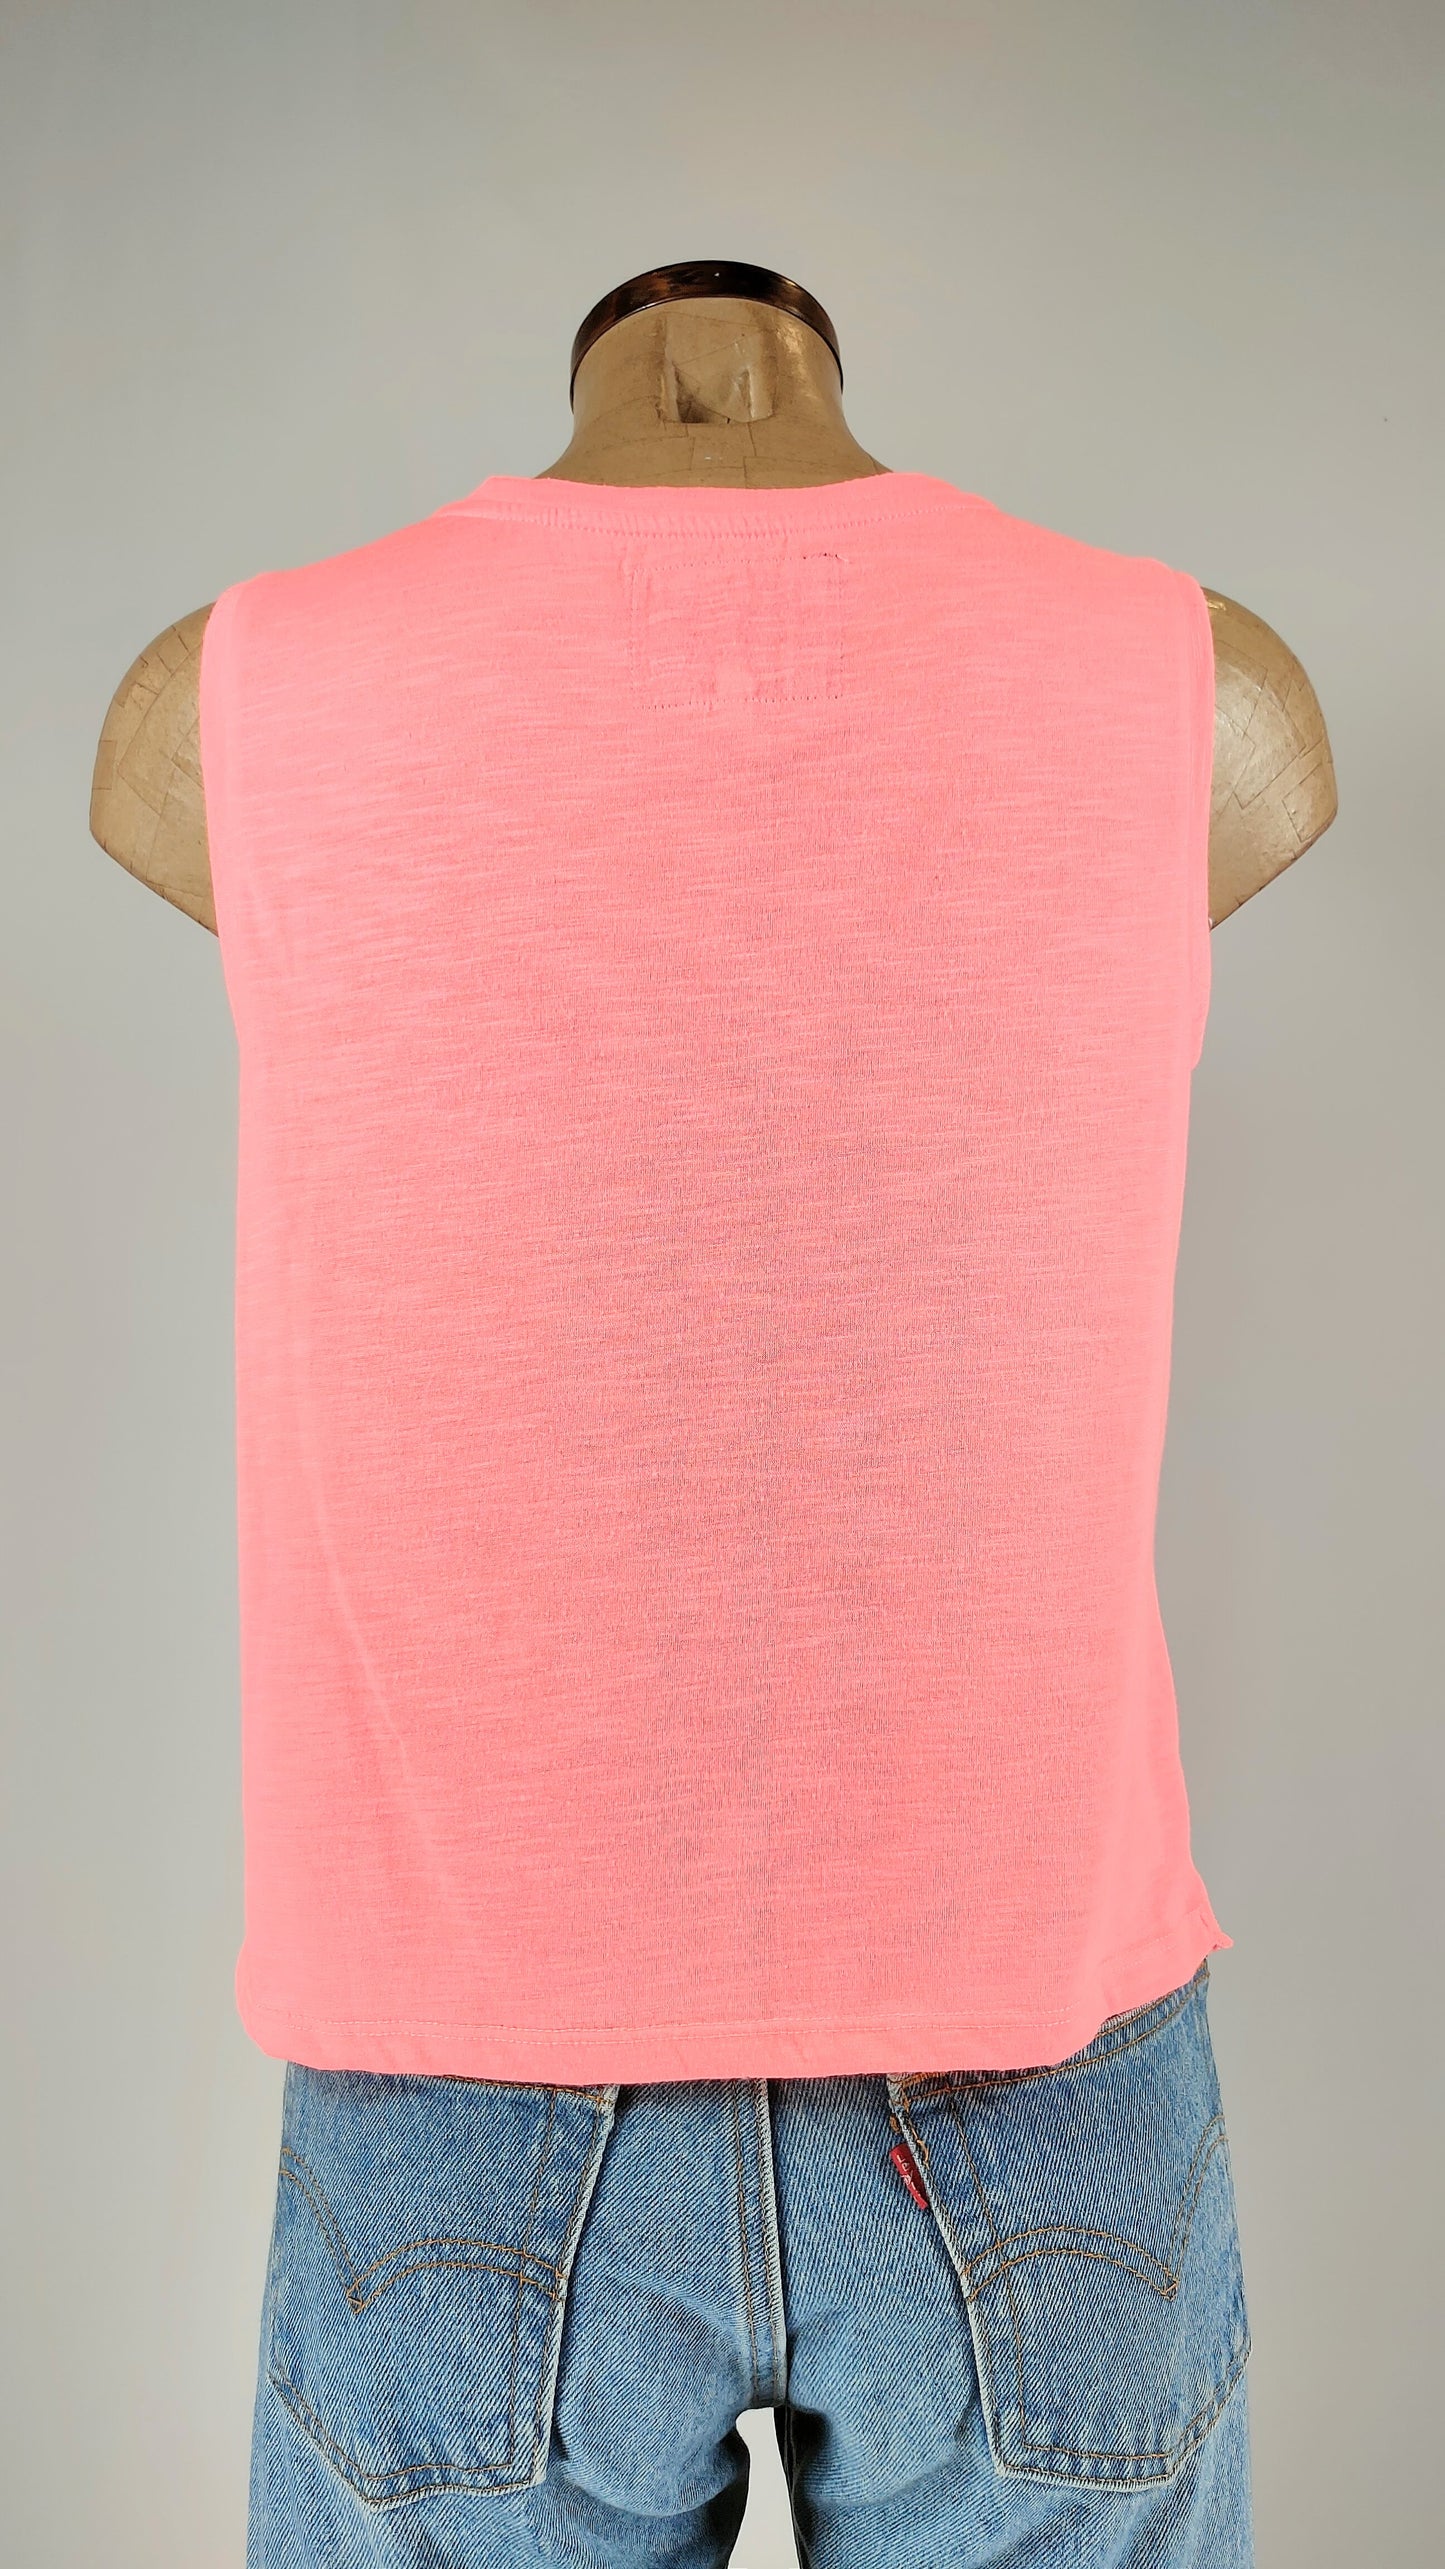 Camiseta rosa flúor